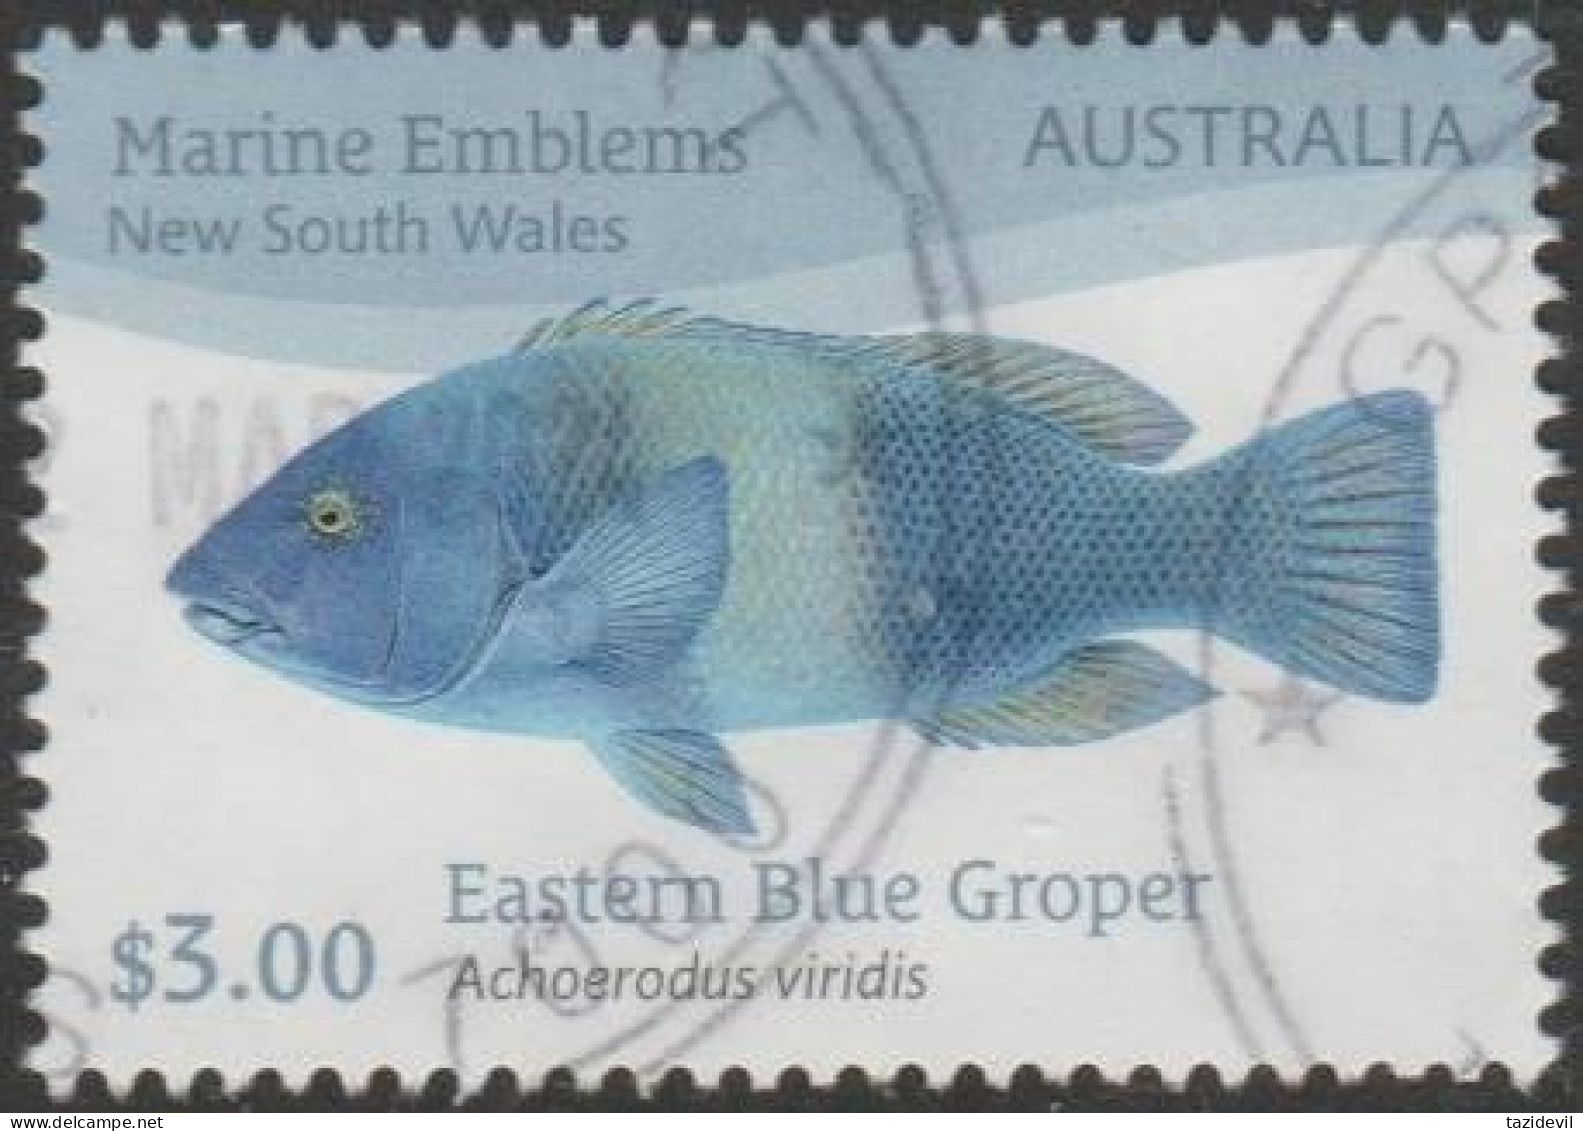 AUSTRALIA - USED 2024 $3.00 Marine Emblems - Eastern Blue Groper, New South Wales - Used Stamps